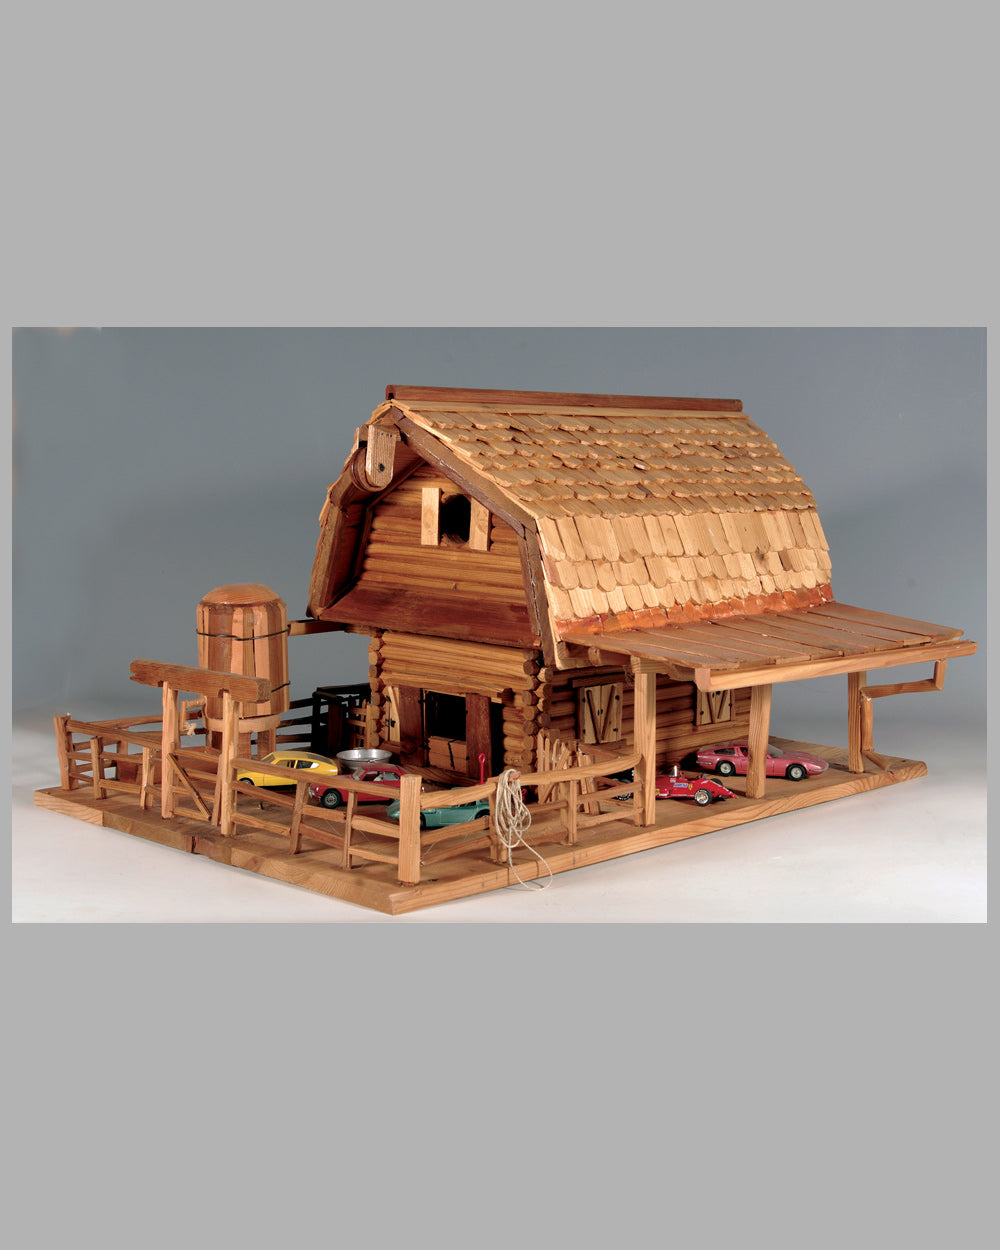 Swiss Log Barn diorama by Dale Daigle, USA